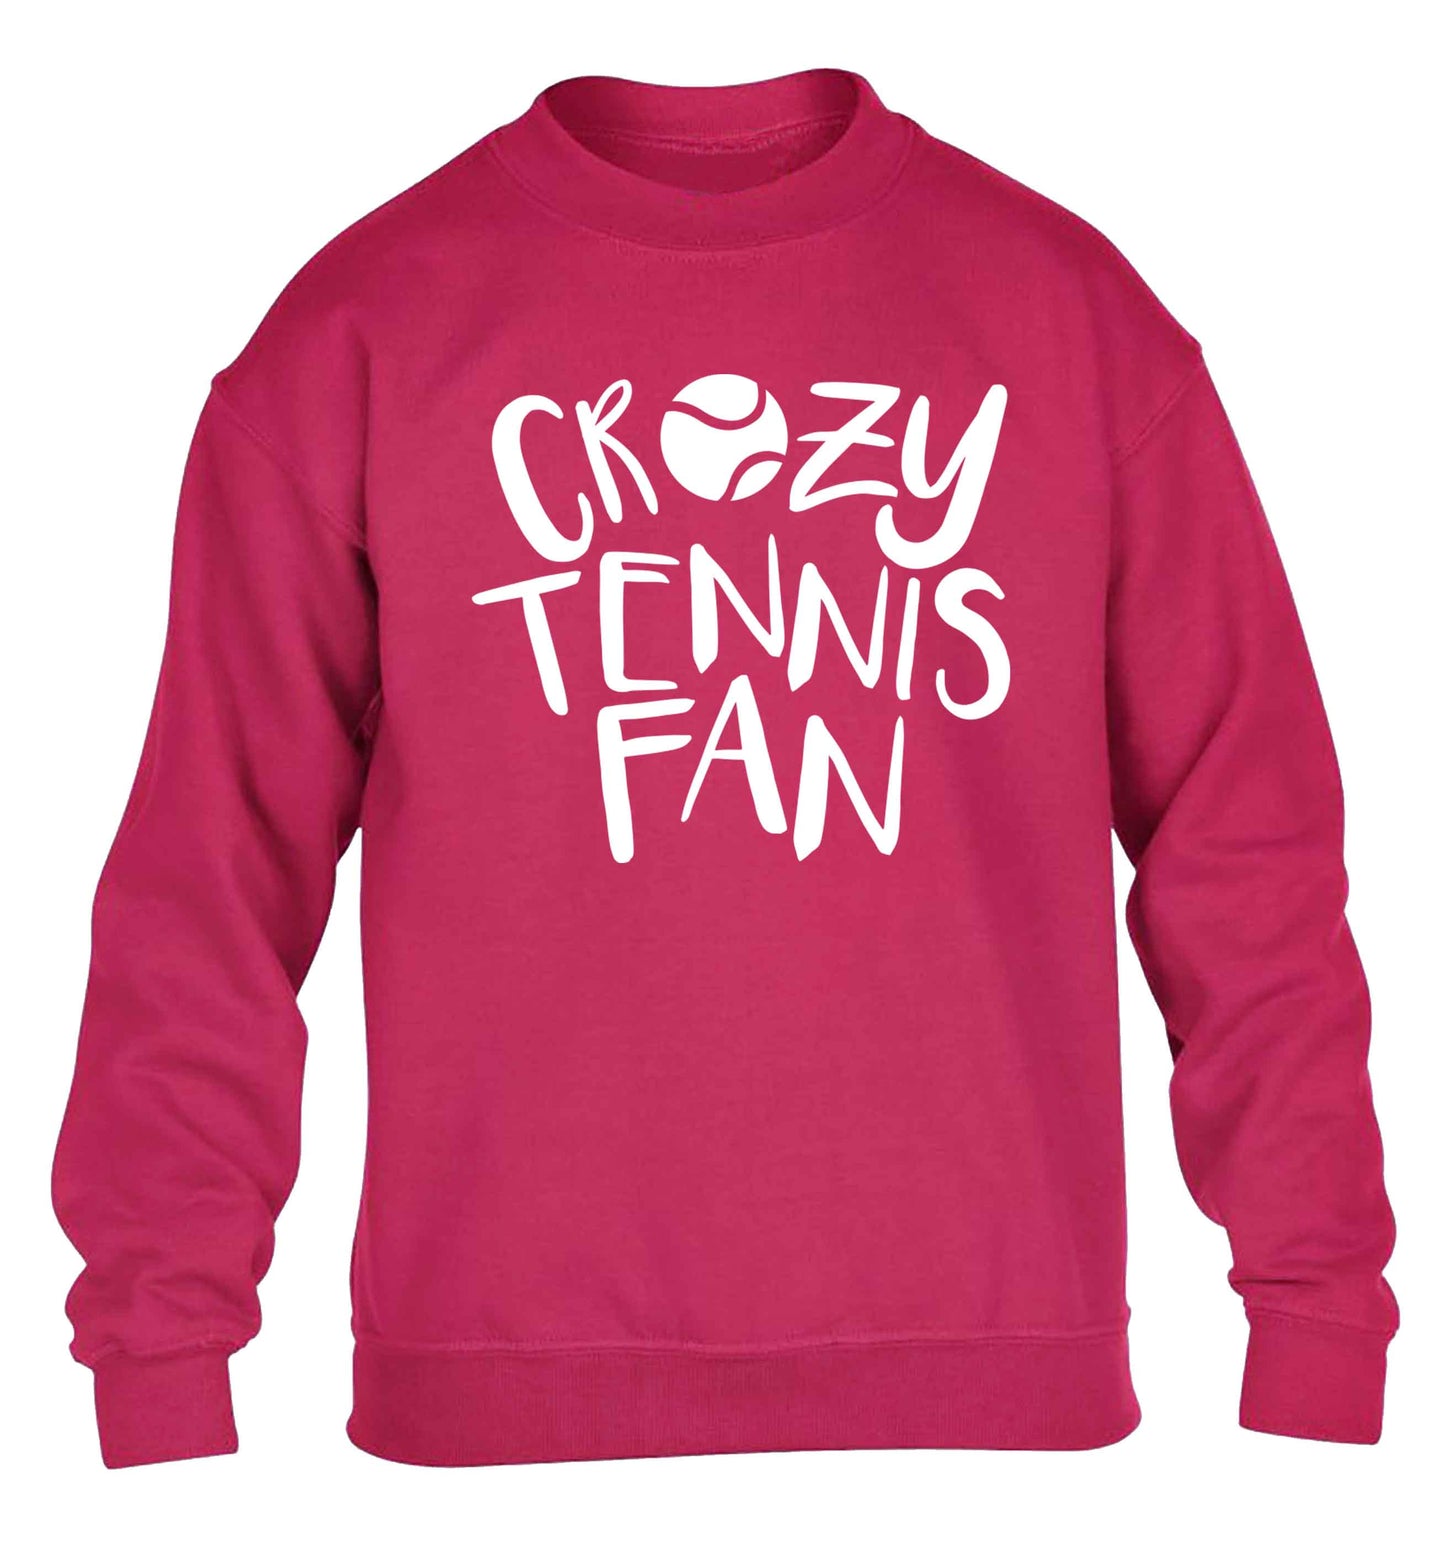 Crazy tennis fan children's pink sweater 12-13 Years